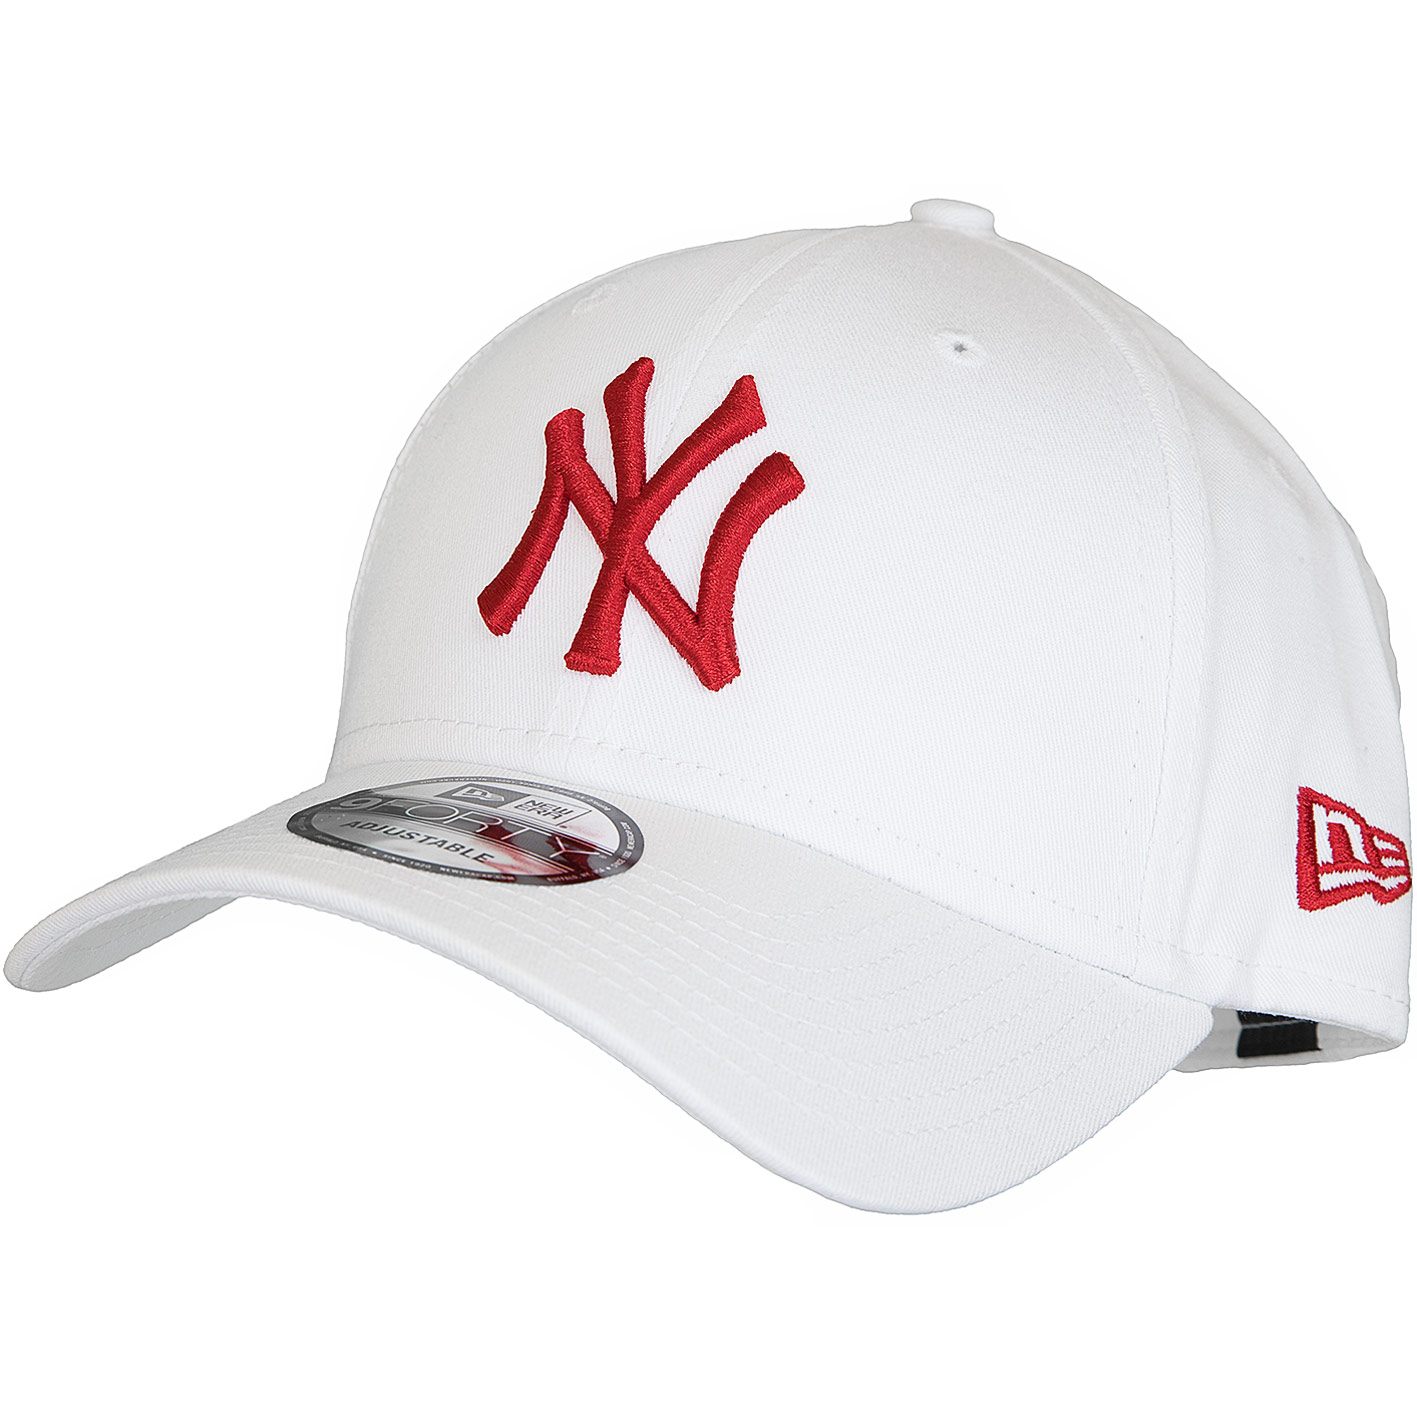 ☆ New Era 9Forty Snapback MLB League Essential weiß/rot - hier bestellen!